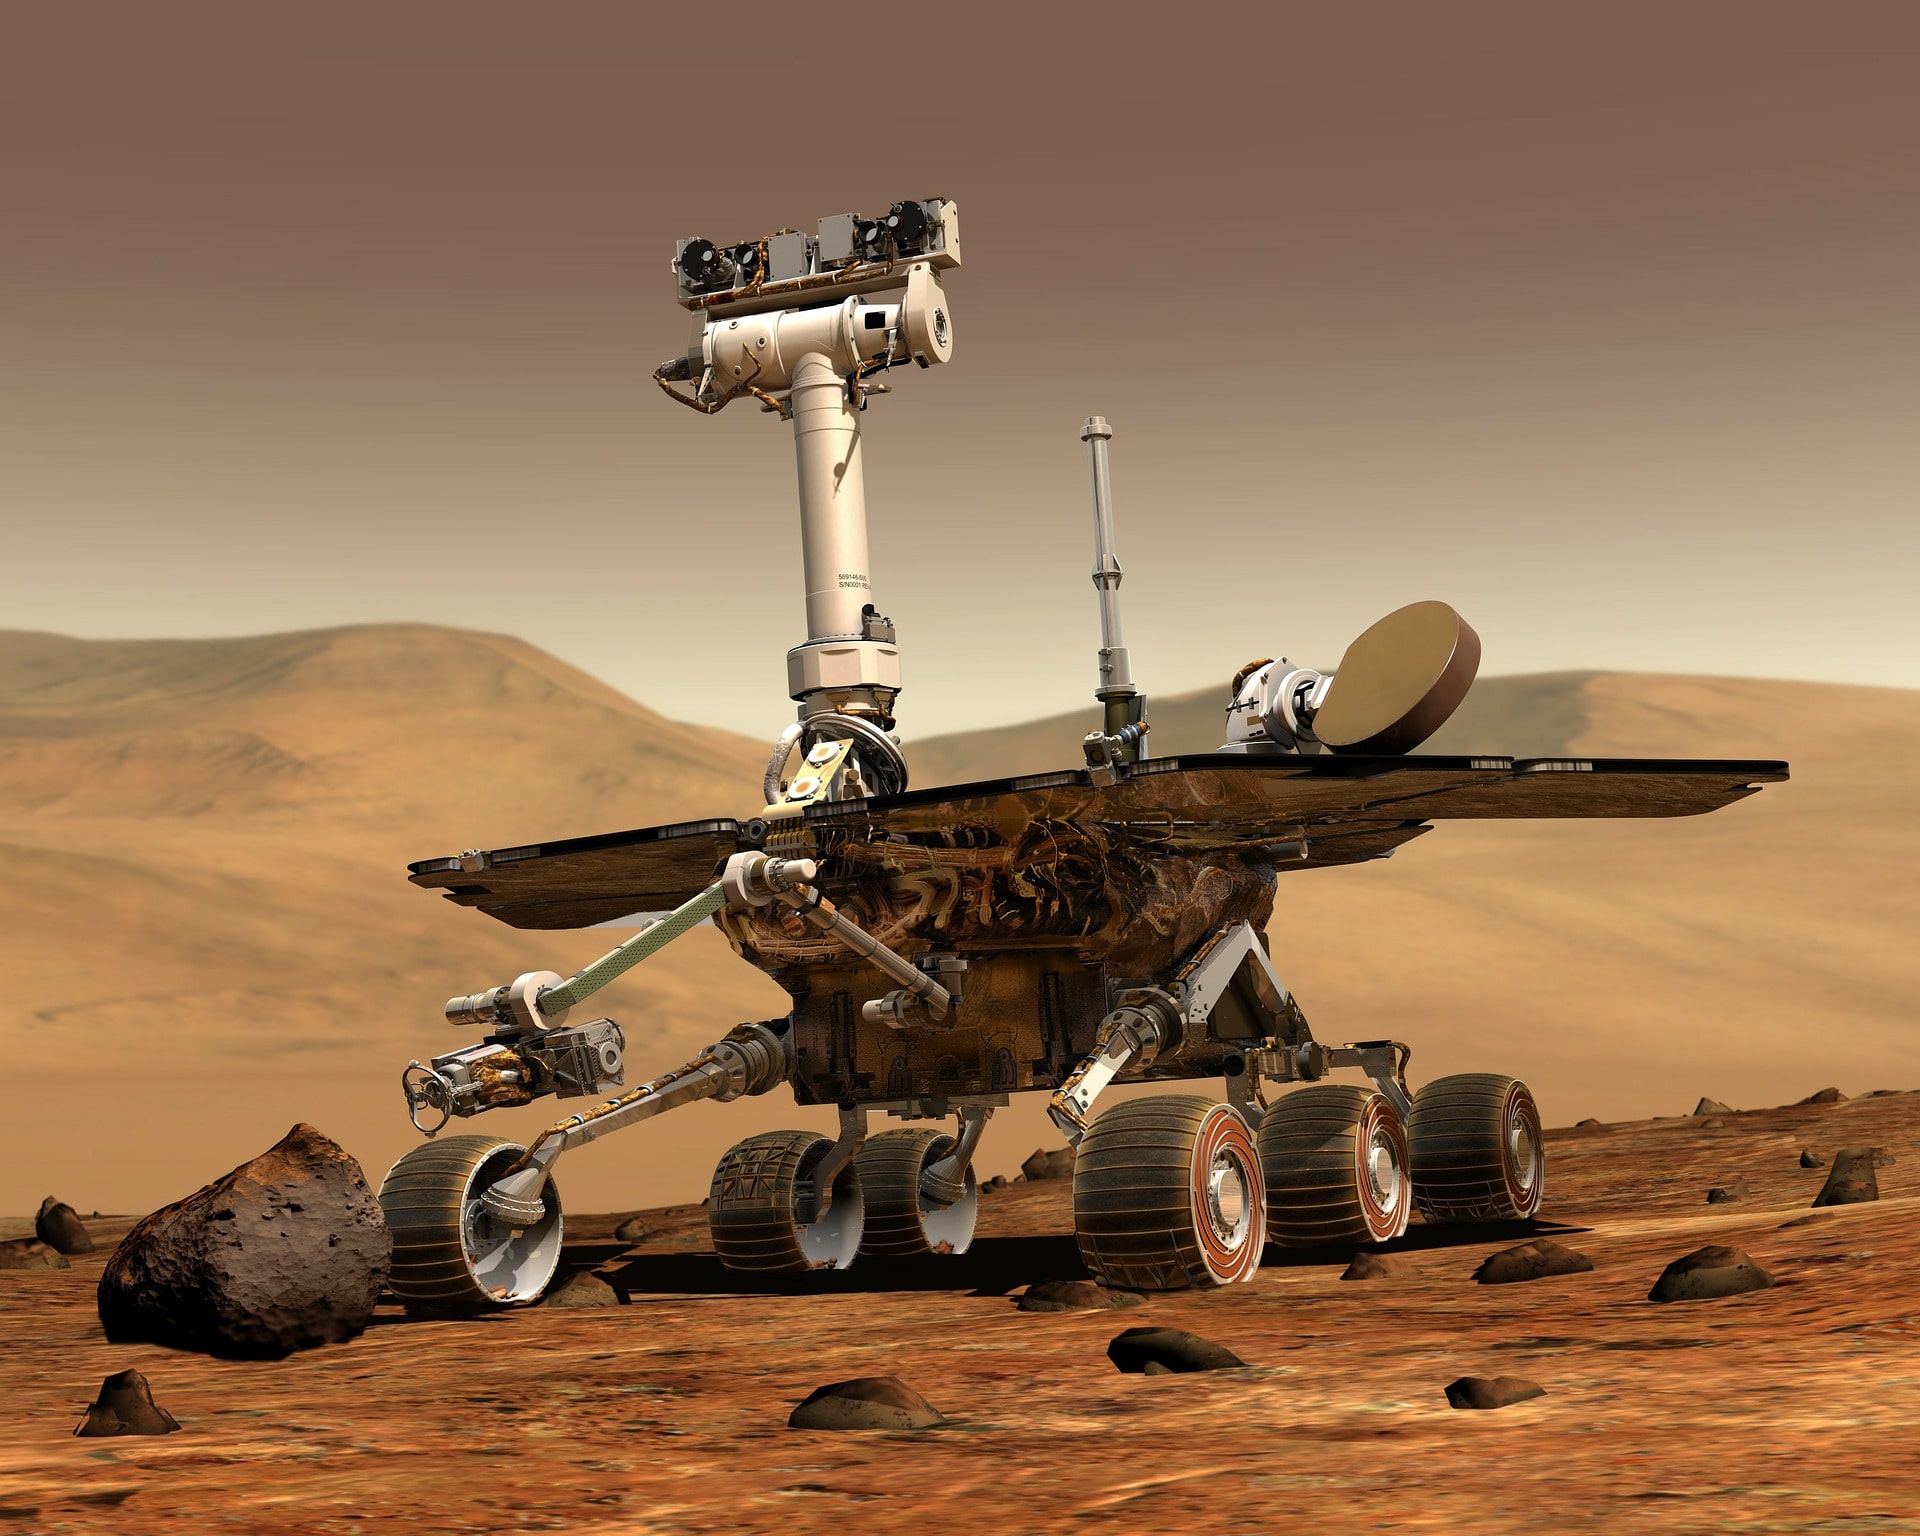 Robot on mars – NASA